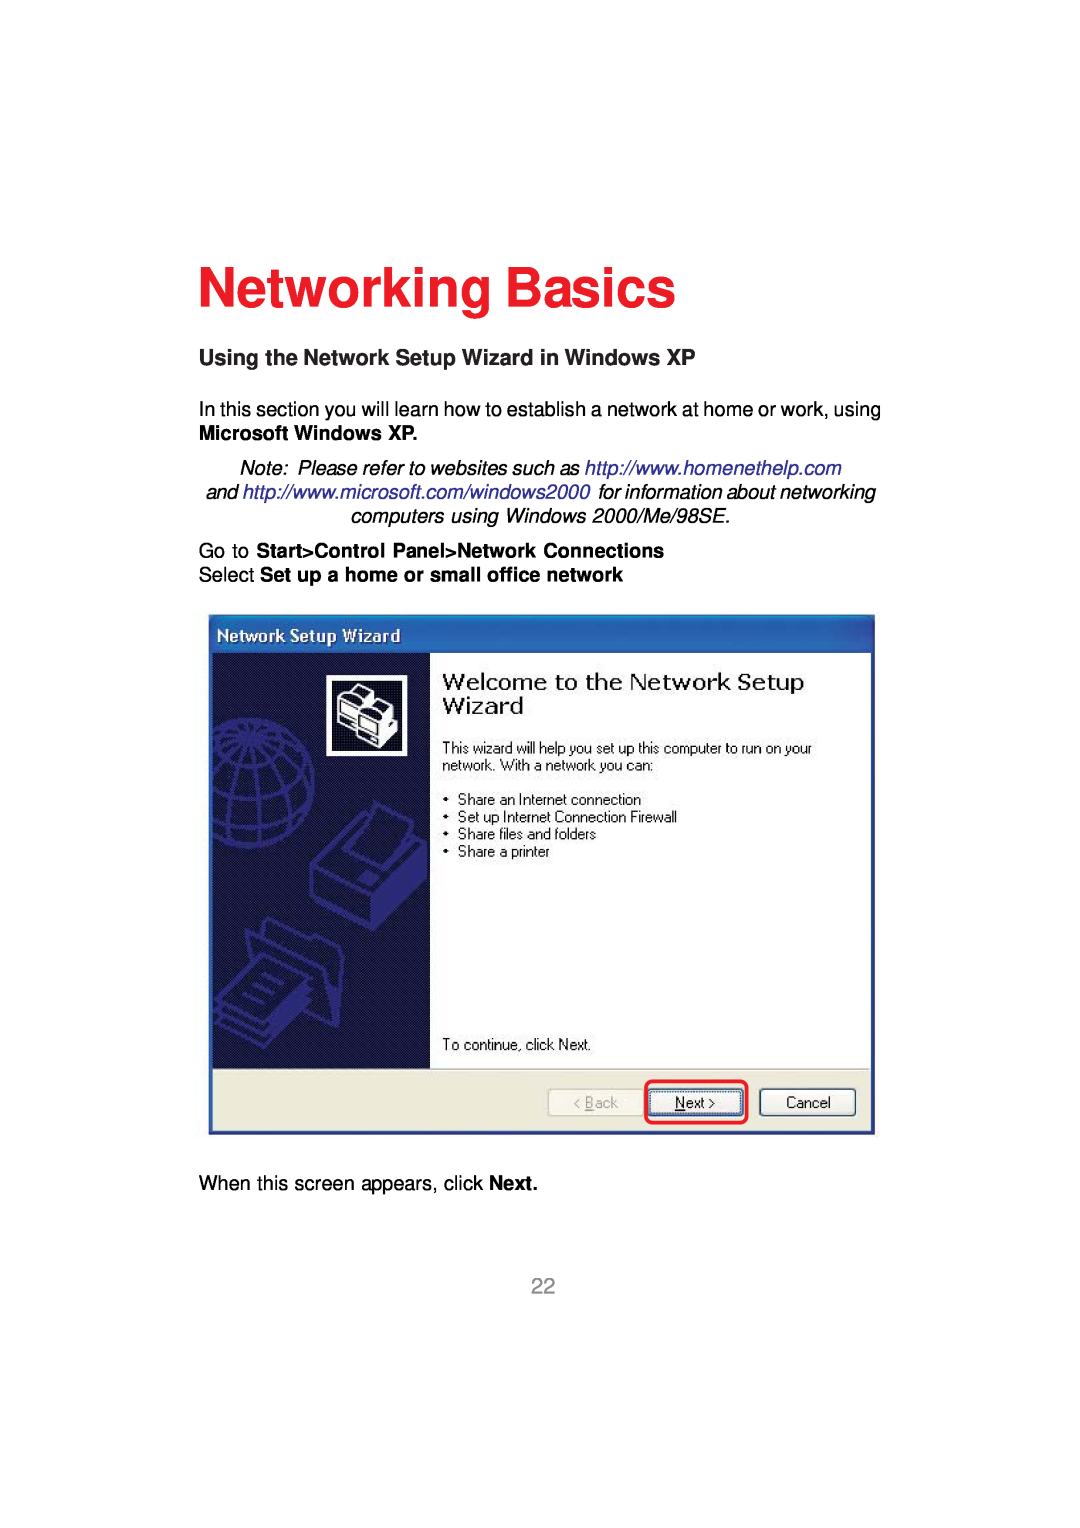 D-Link DWL-AG530 manual Networking Basics, Using the Network Setup Wizard in Windows XP, Microsoft Windows XP 